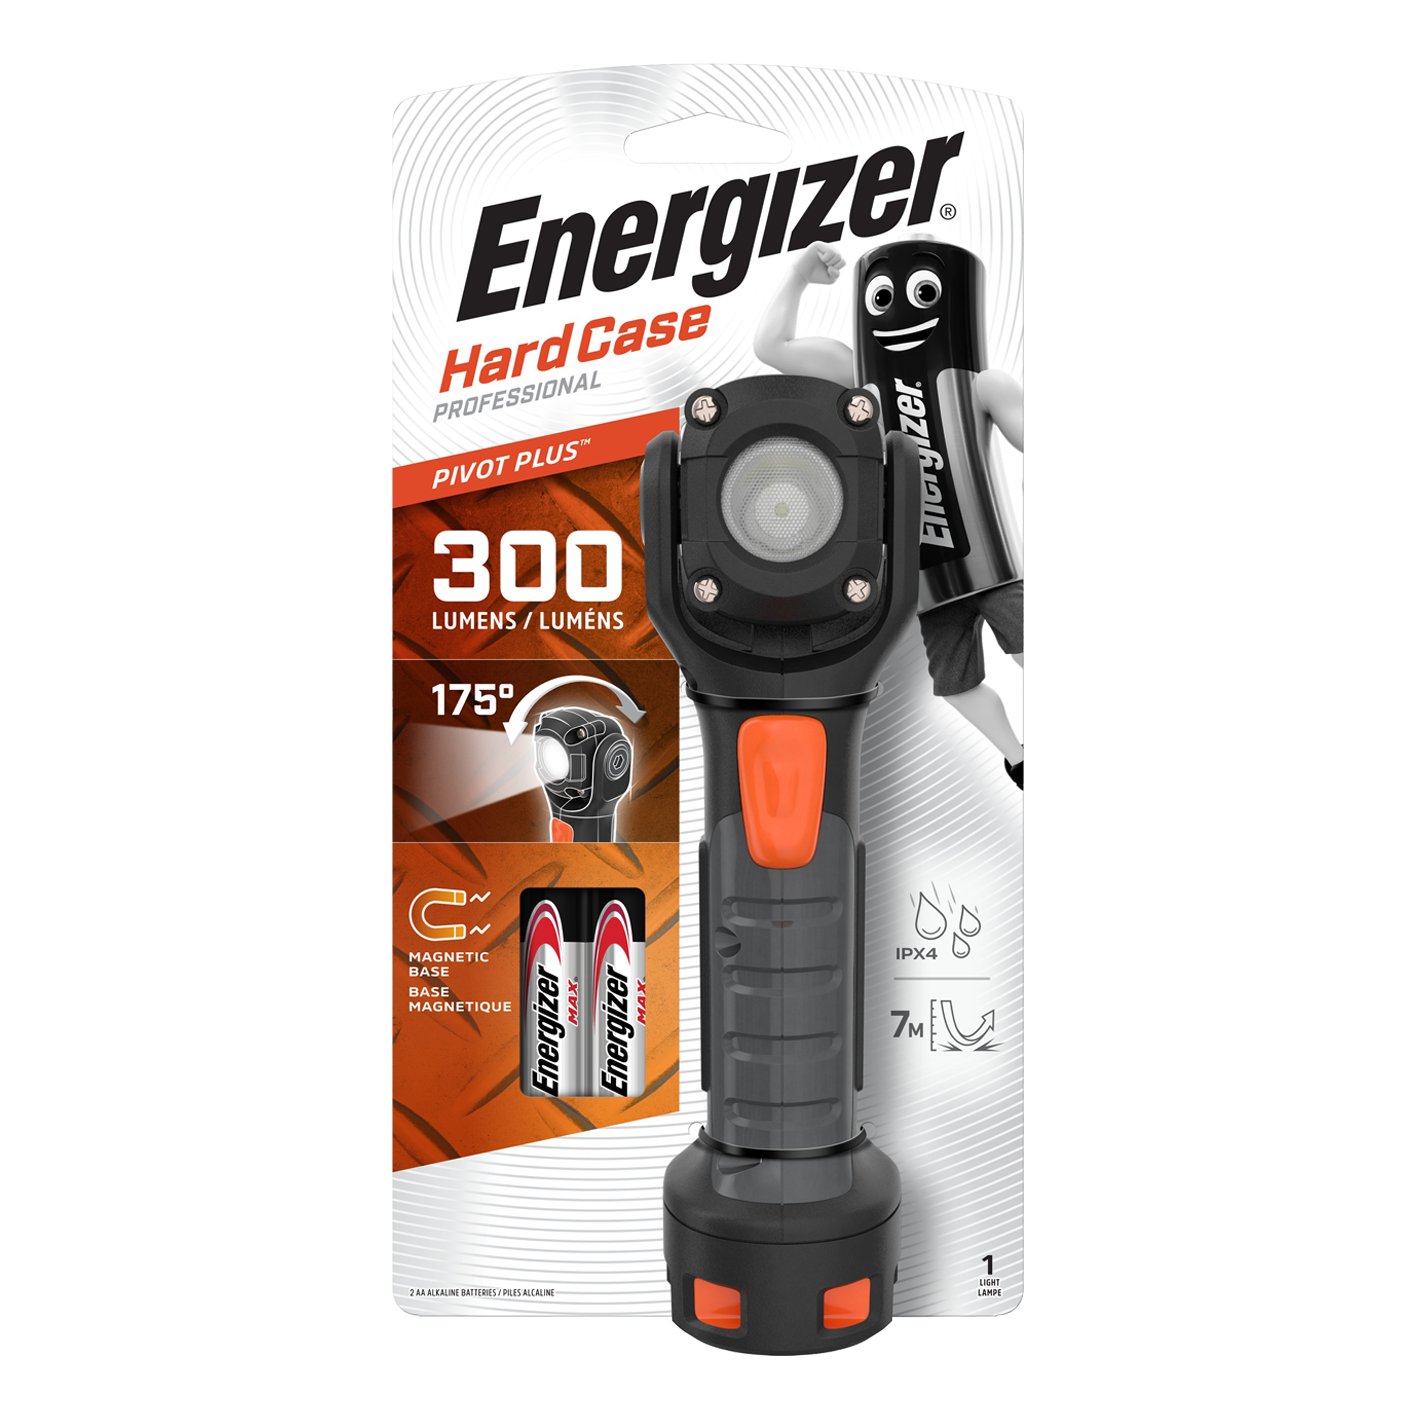 Energizer Hardcase 300 Lumen LED Pivot Plus Taschenlampe mit 2 x AA-Batterien